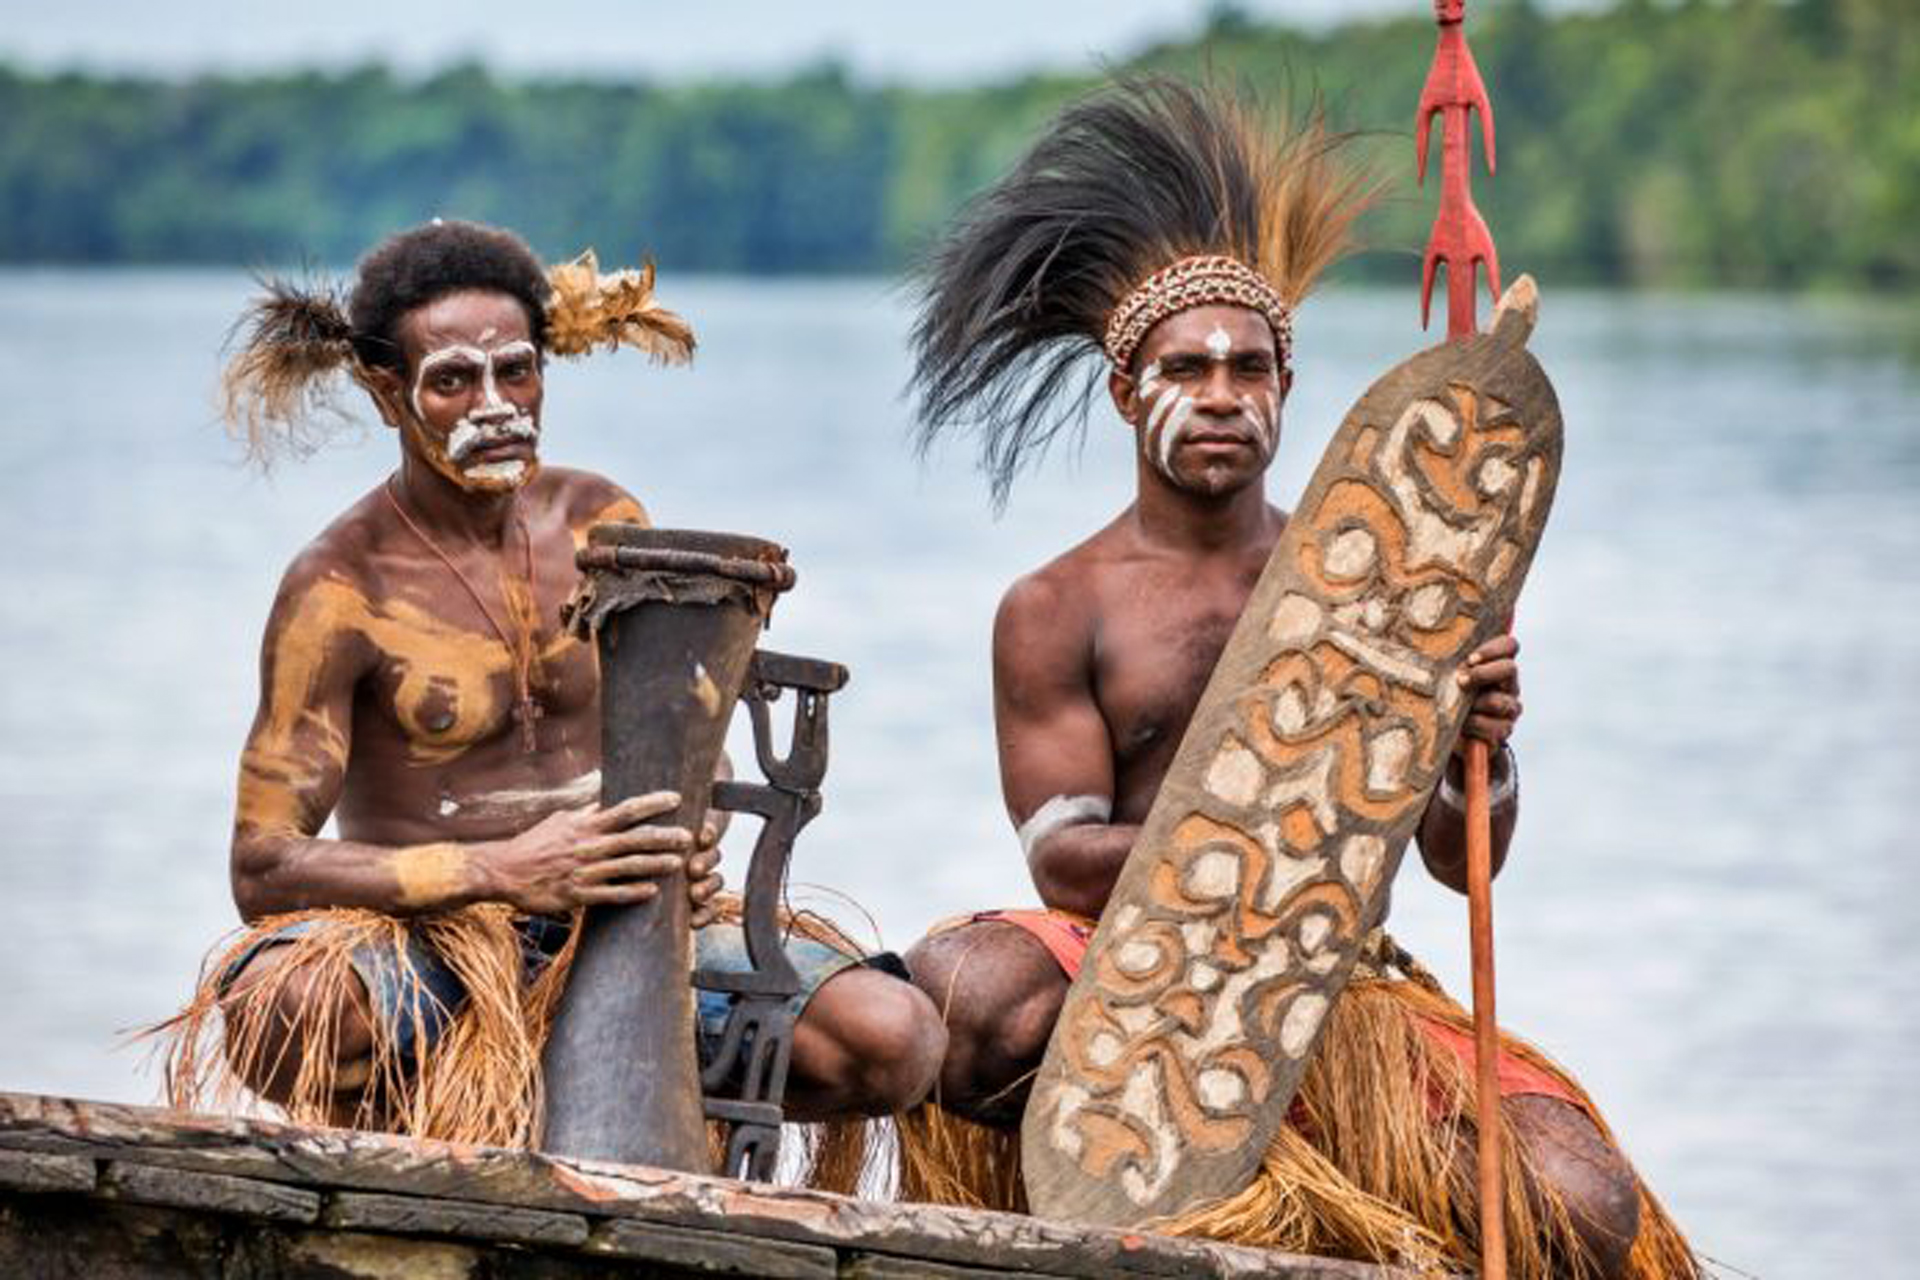 Suku Bangsa Asmat  Di Papua, Indonesia